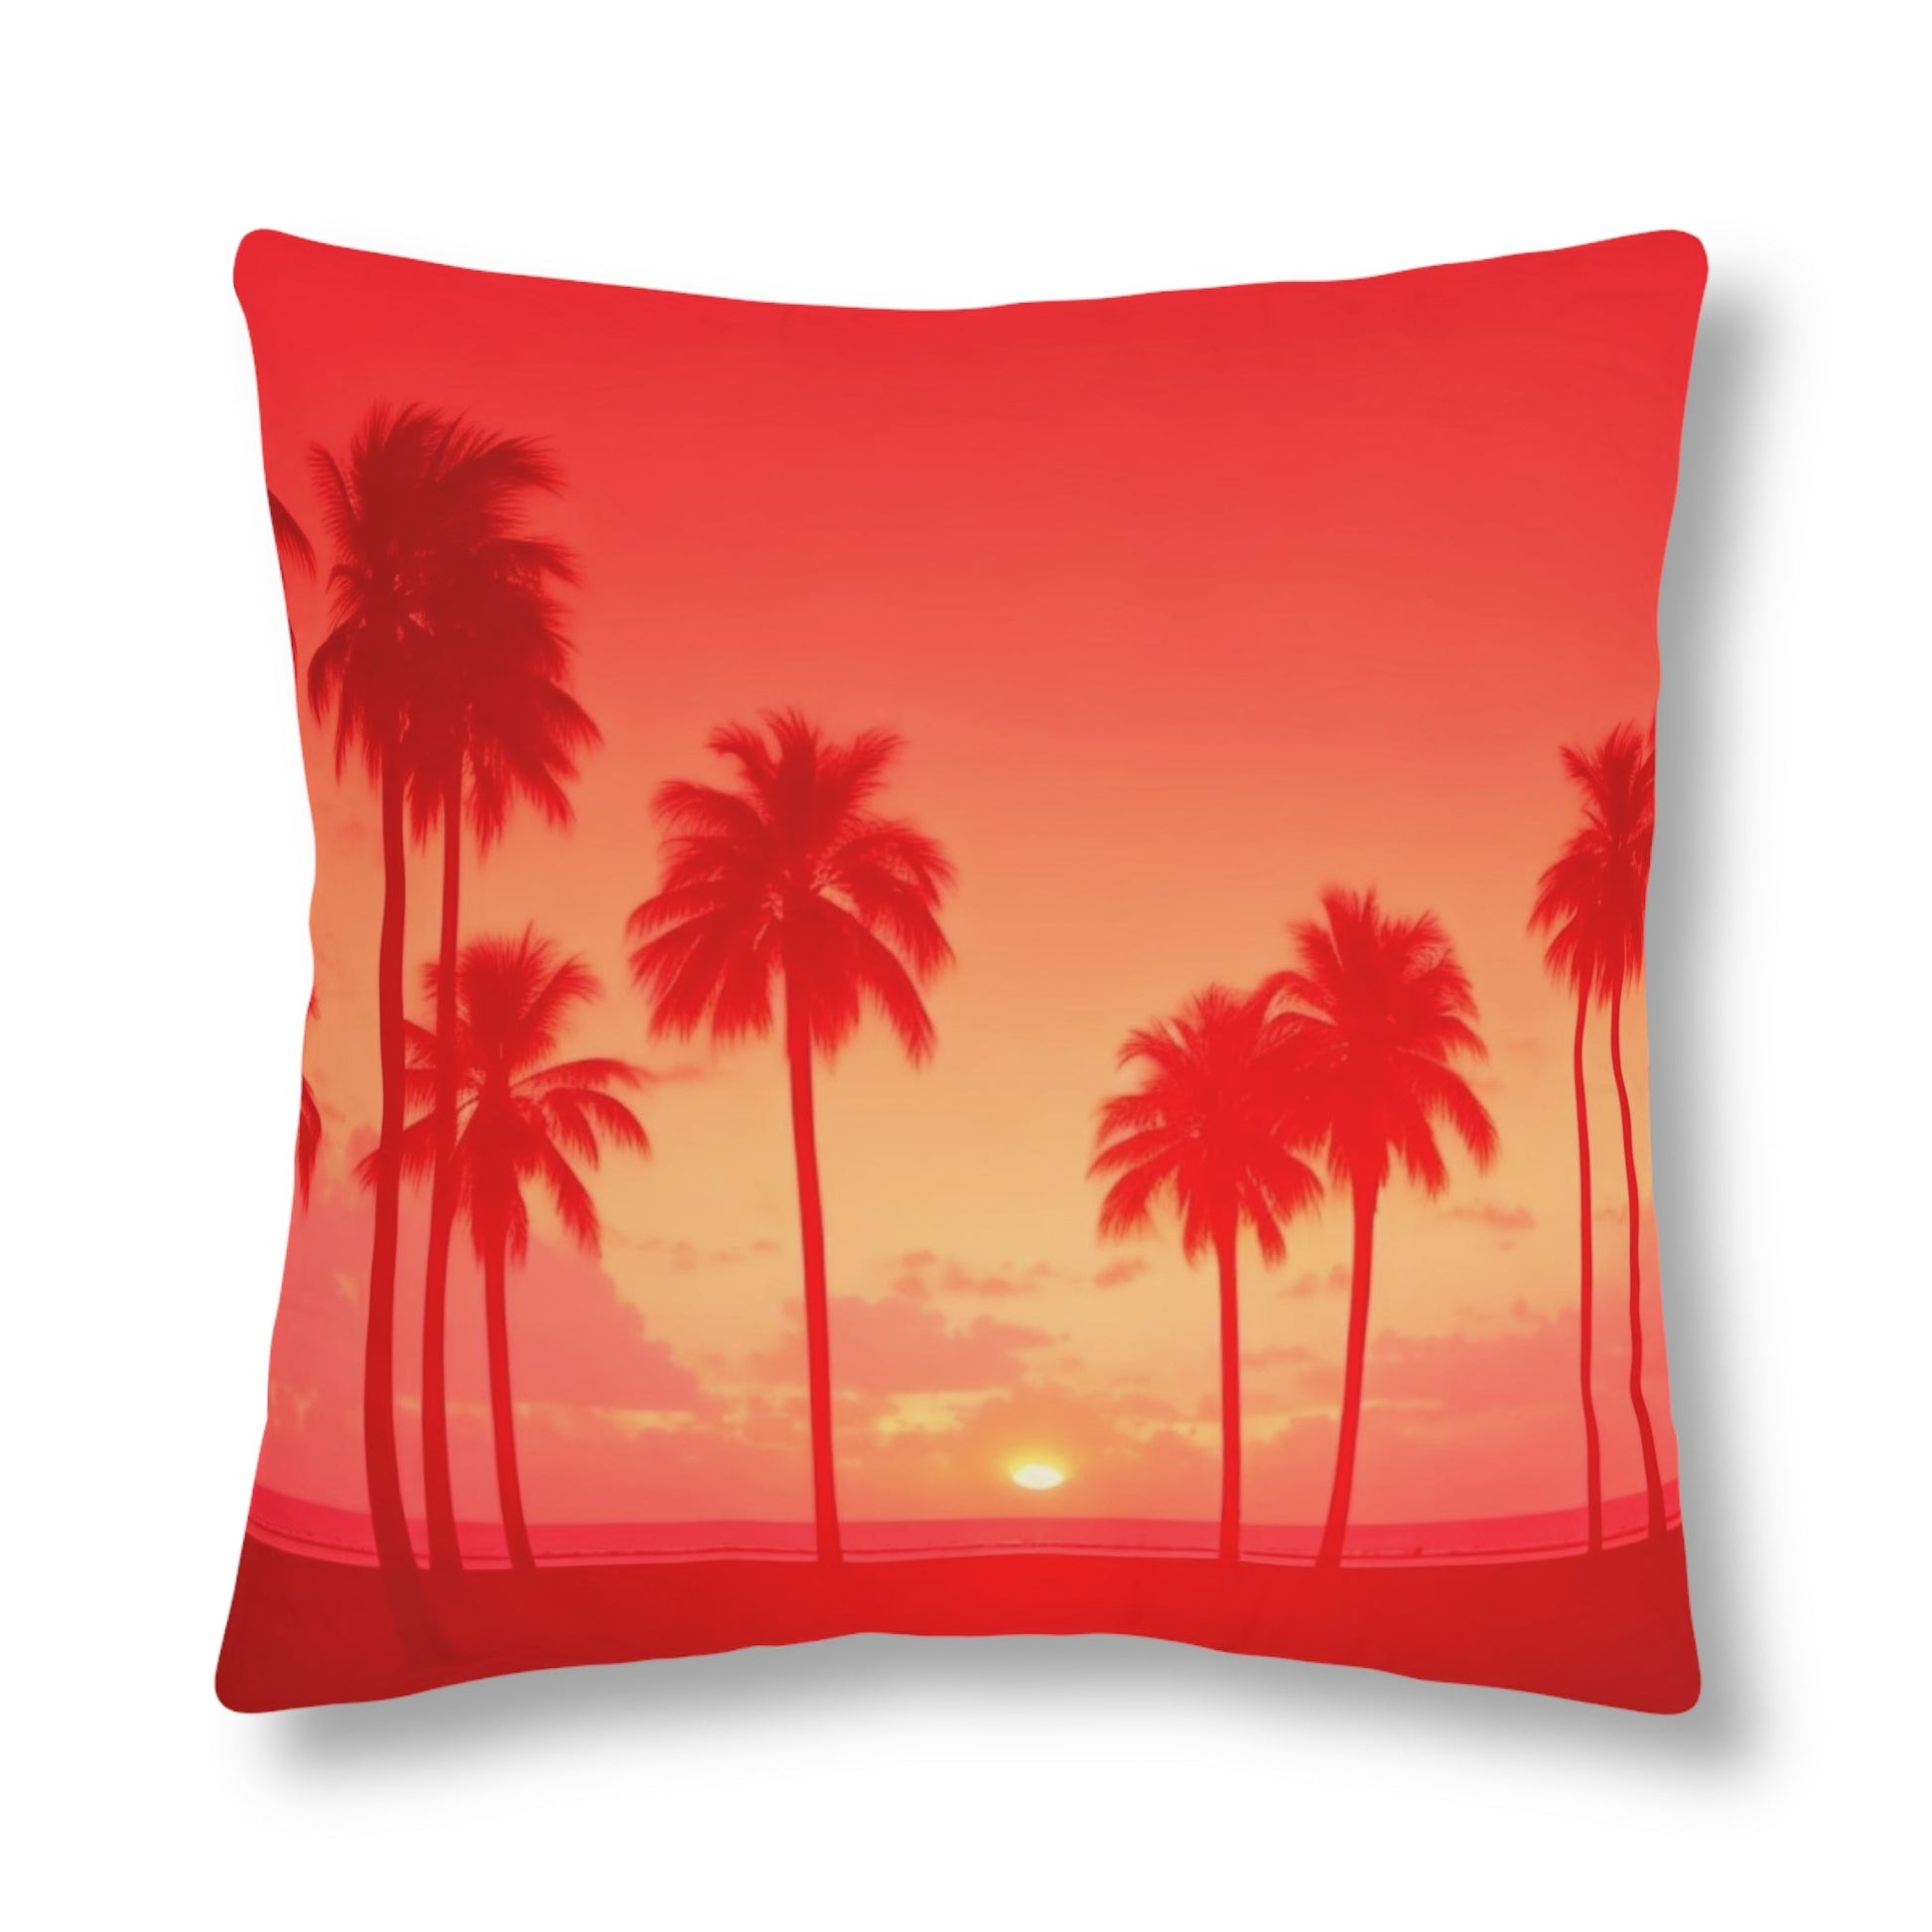 Home Decor - Red Sunset Waterproof Pillows